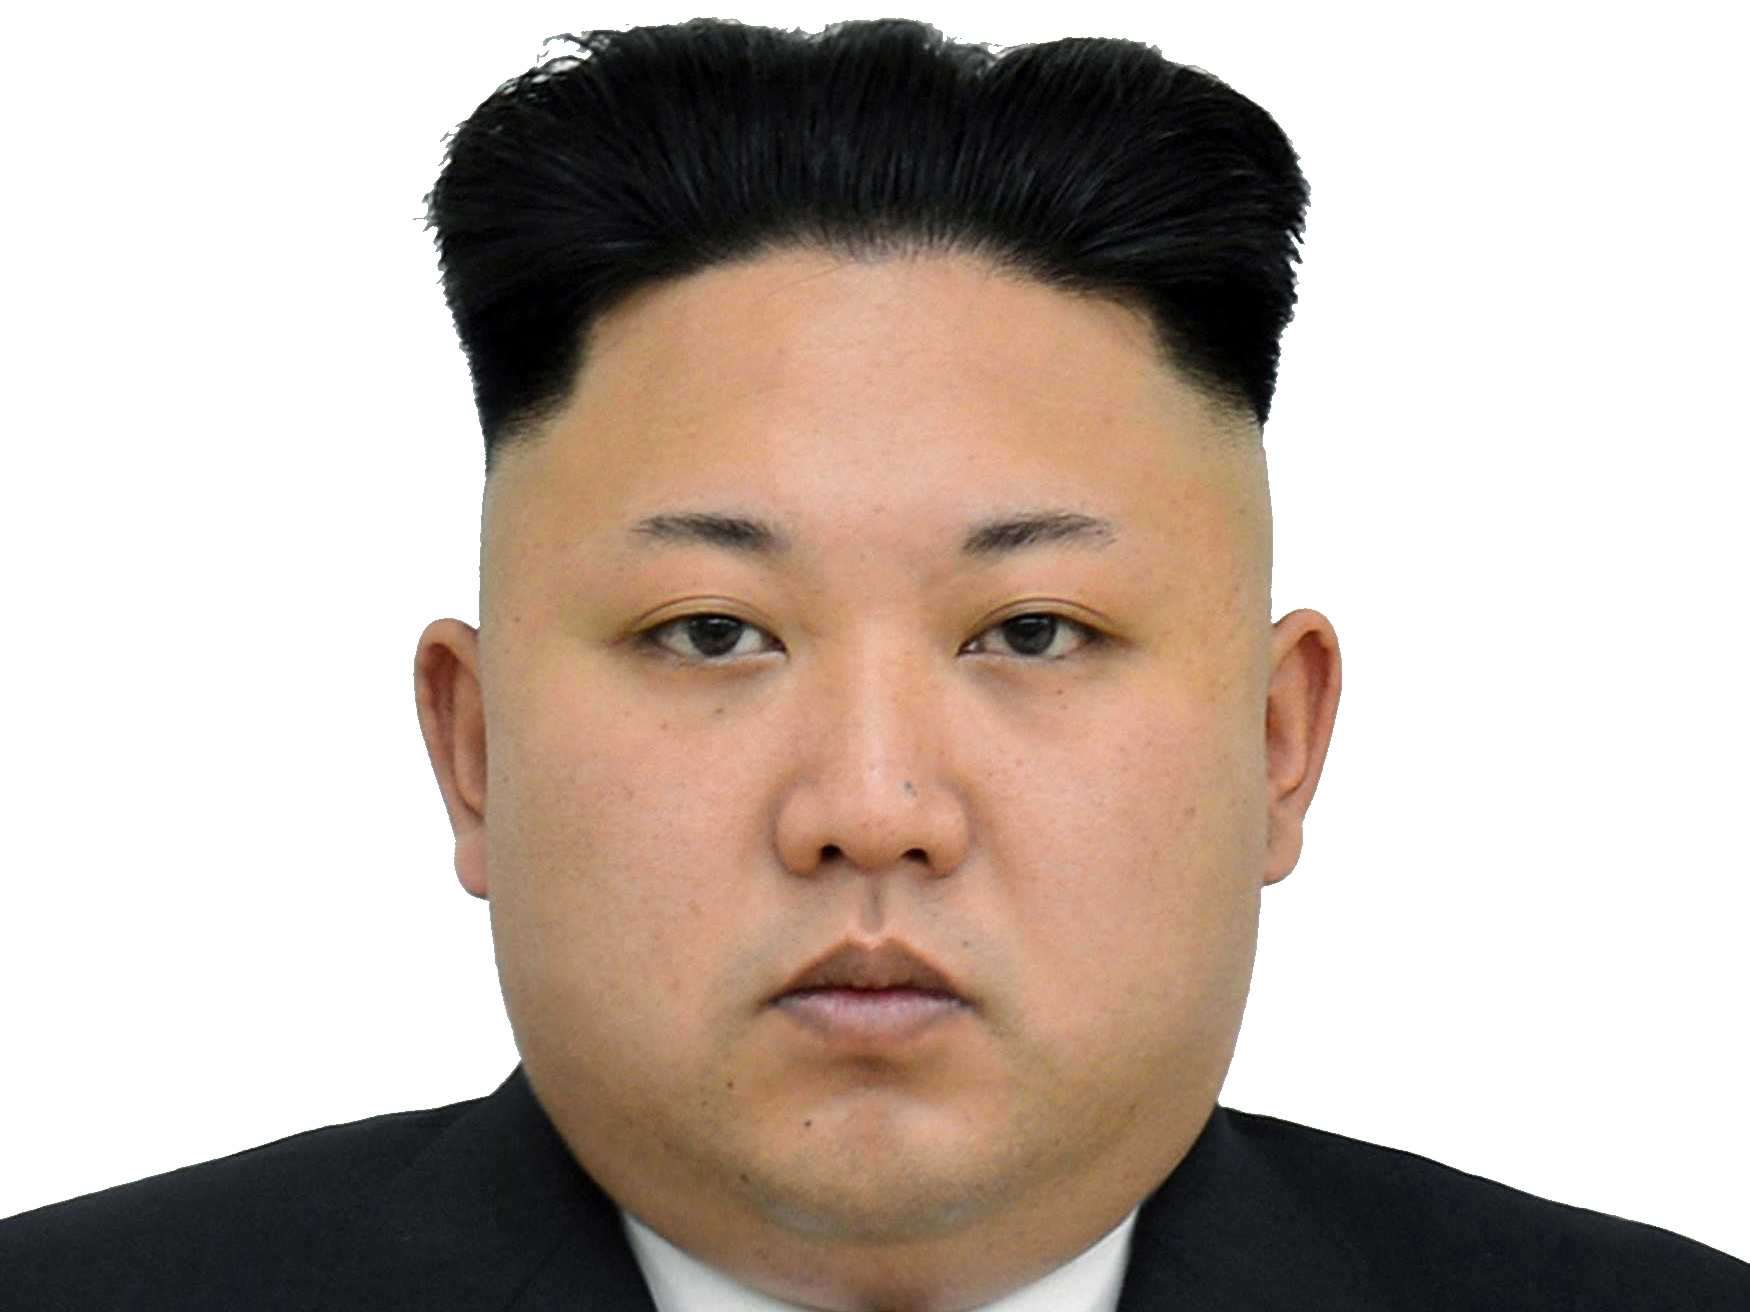 Kim Jong-Un Face PNG Image Background